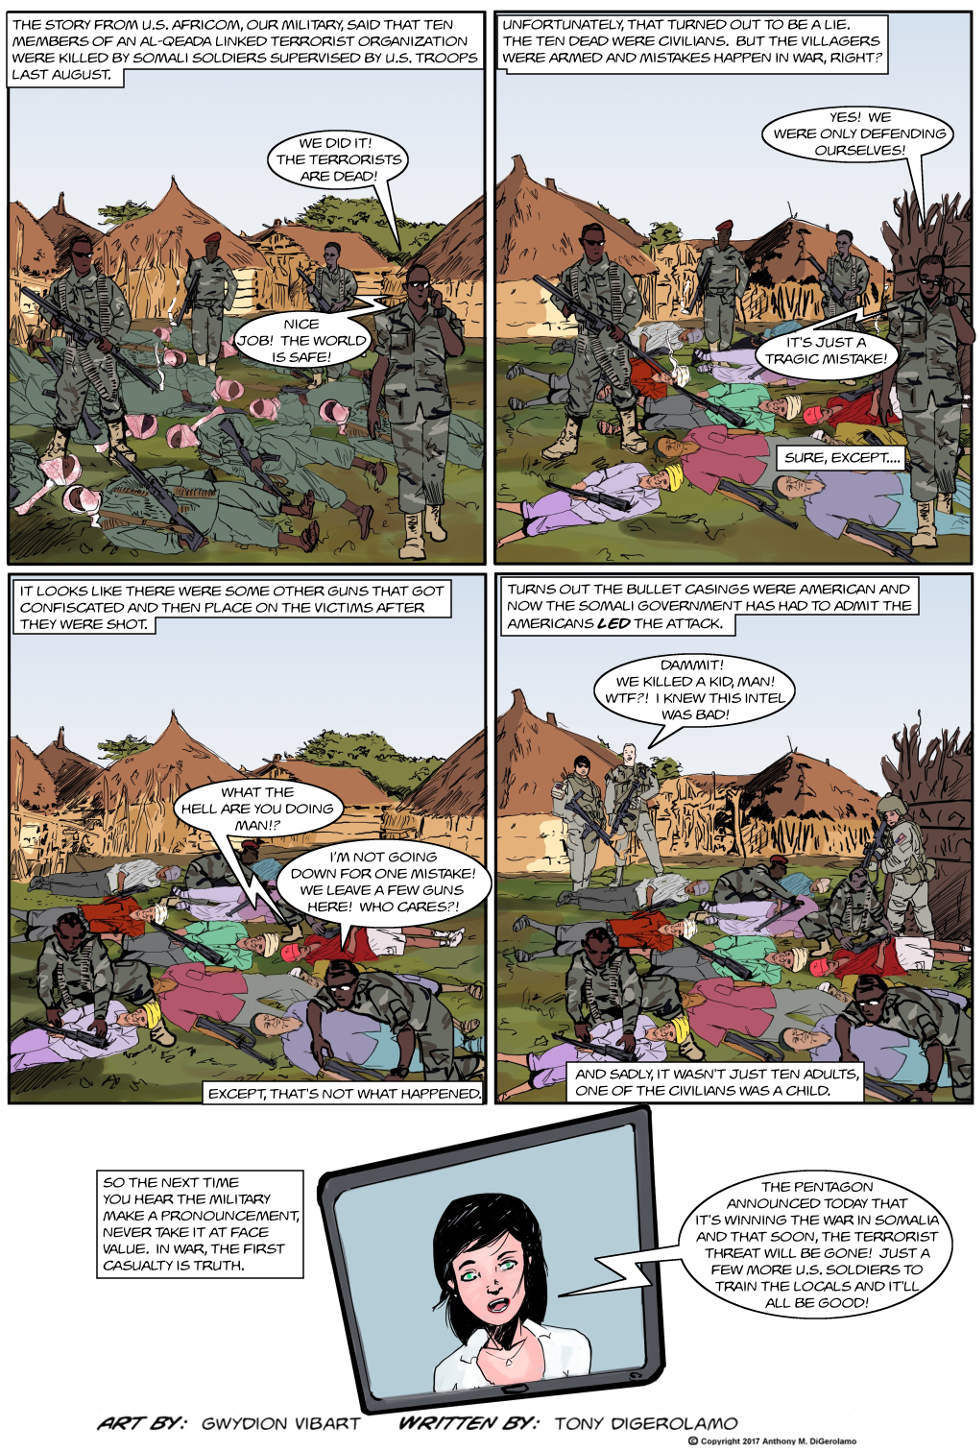 The Antiwar Comic:  The “Terrorists” Are Dead